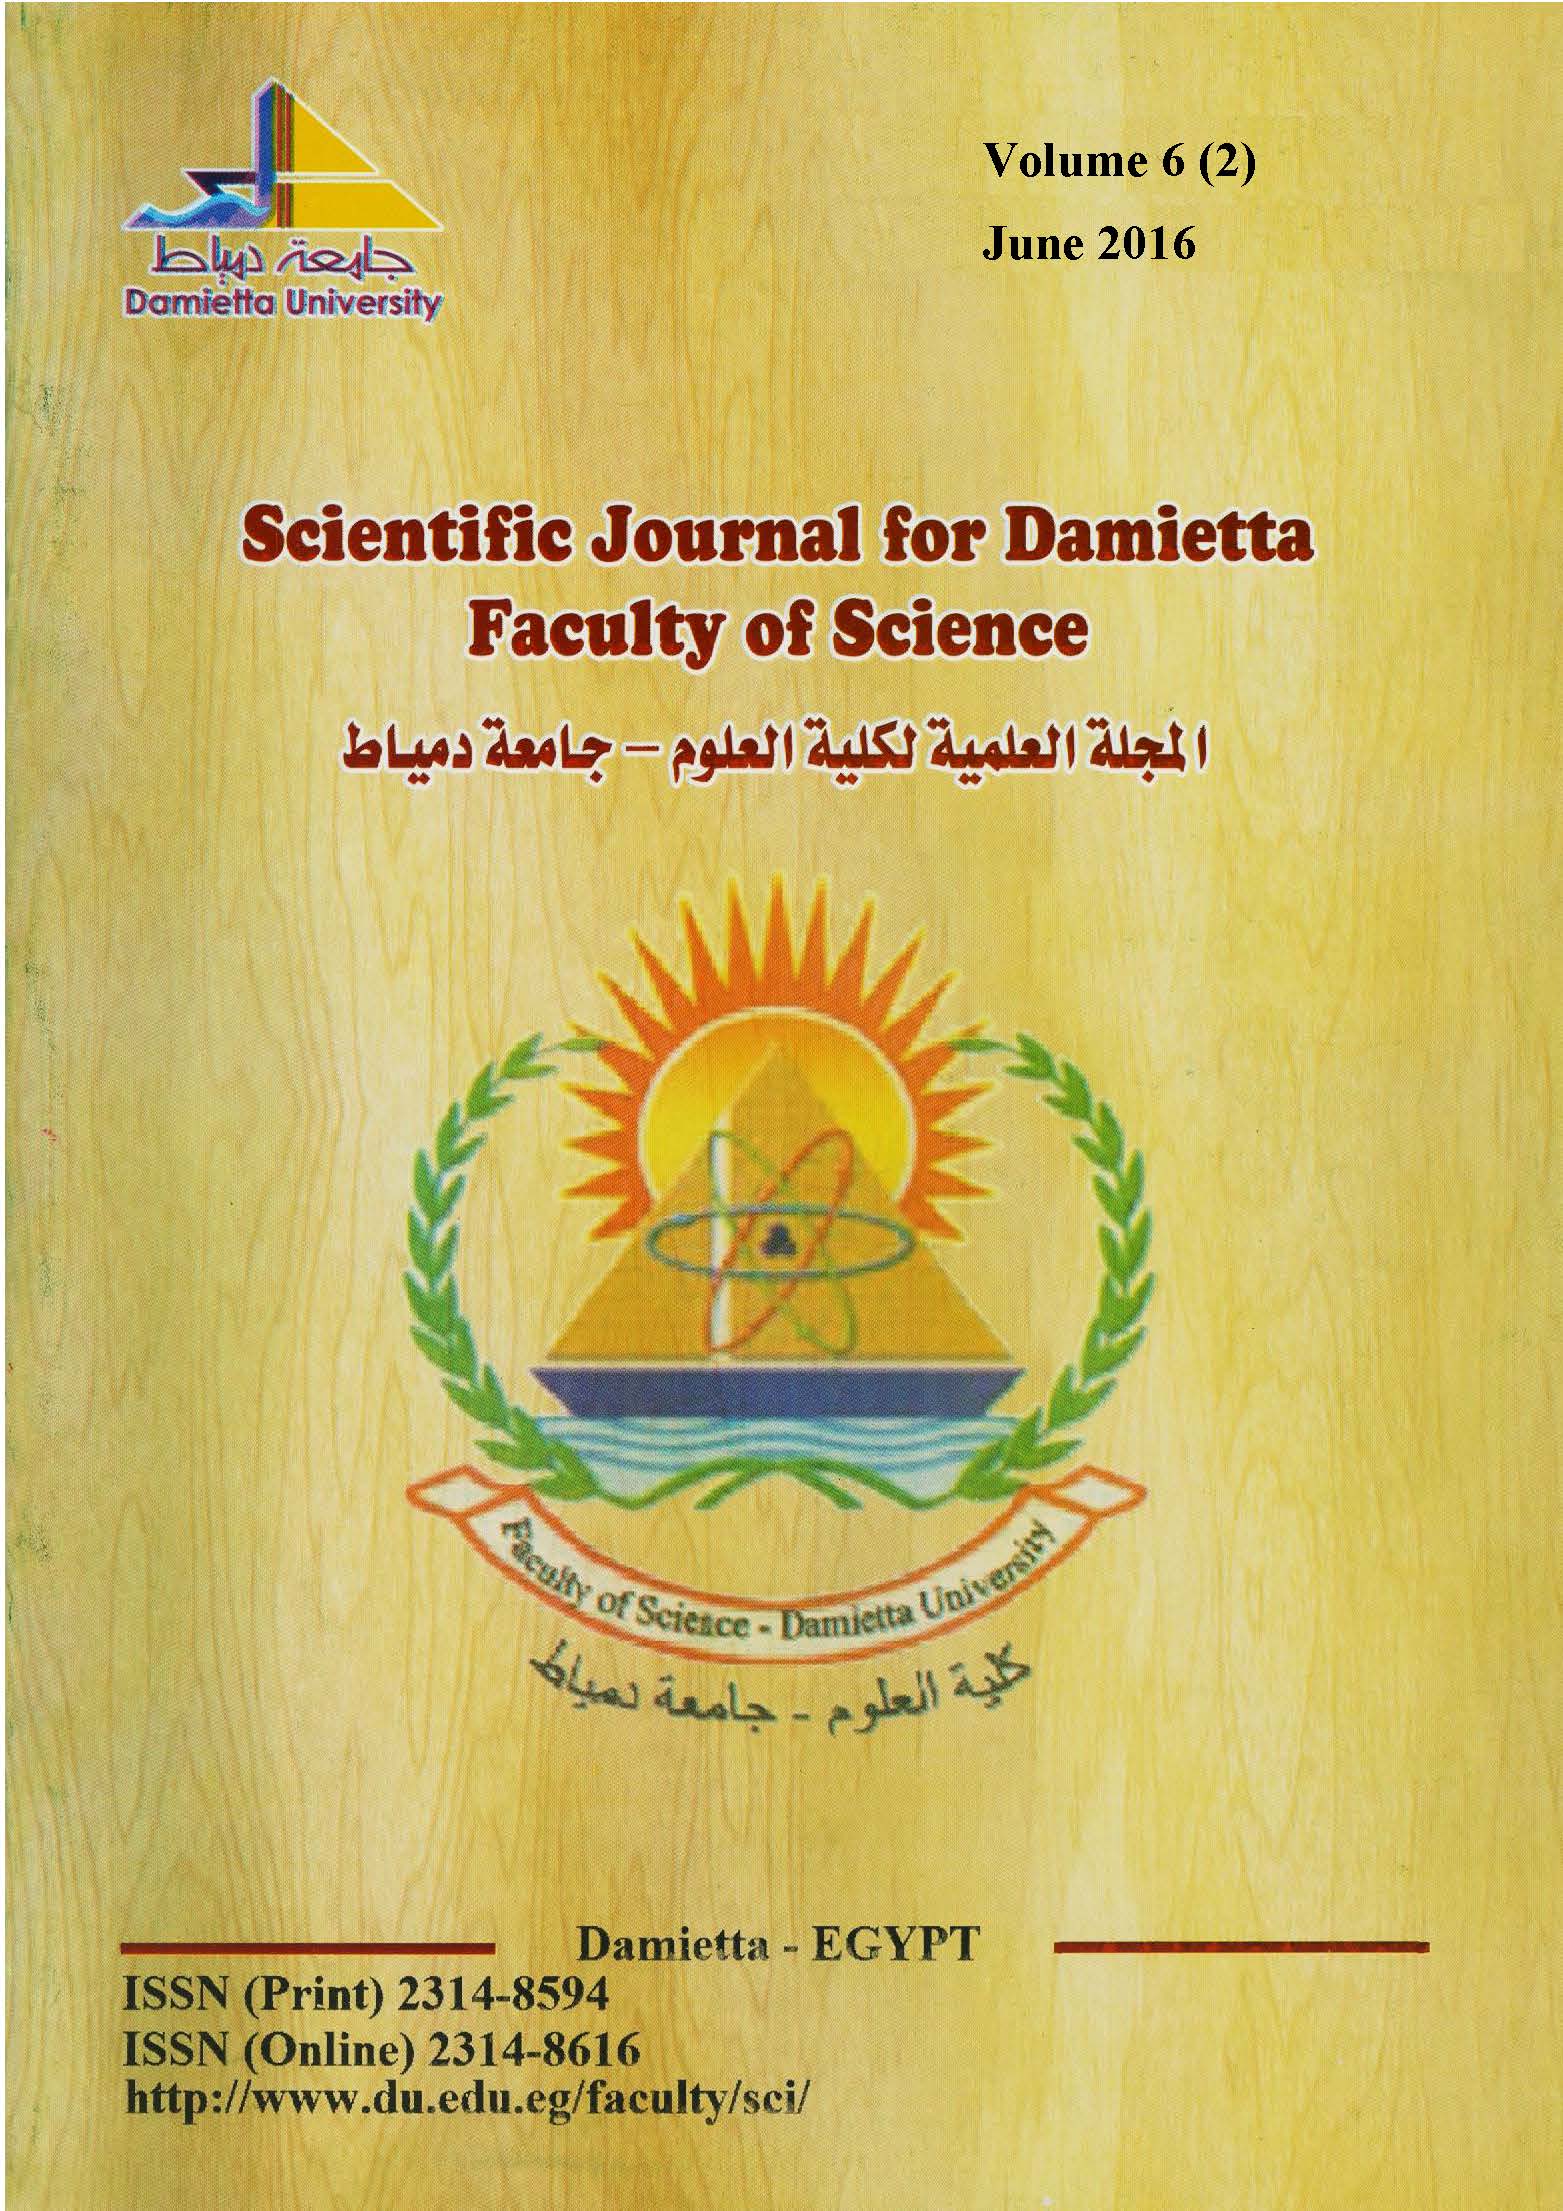 Scientific Journal for Damietta Faculty of Science